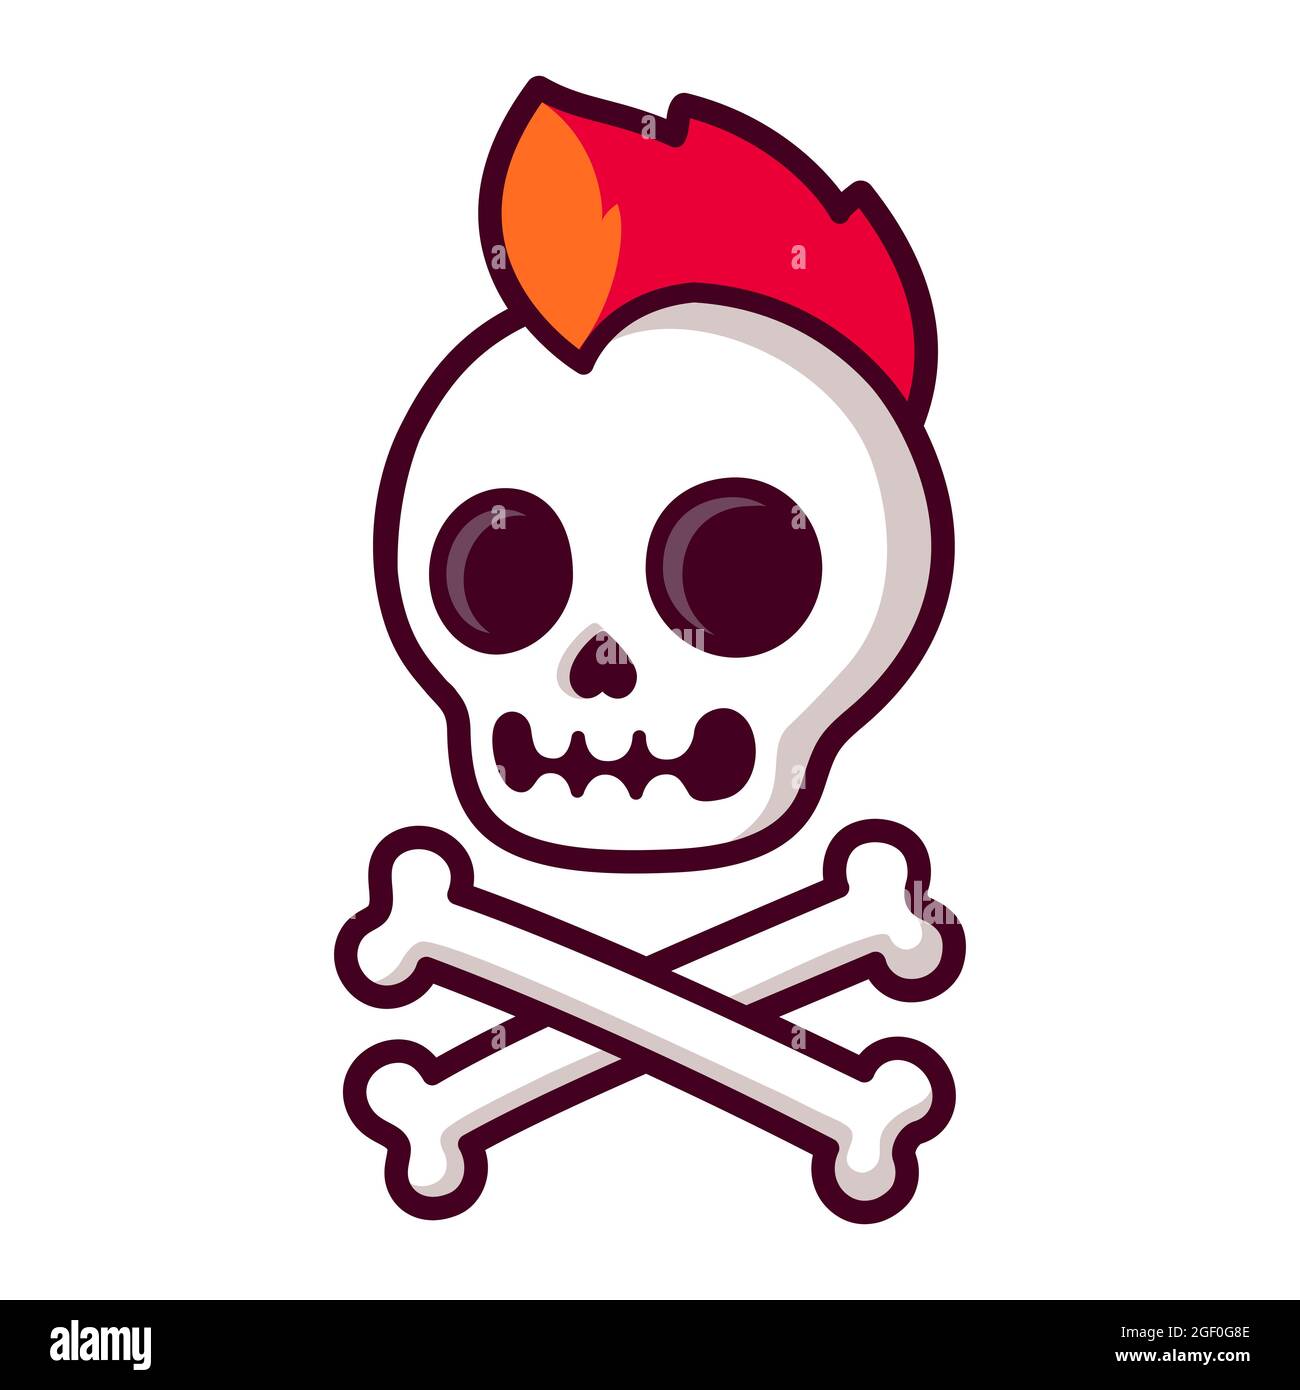 Cool Cartoon Punk Rock Totenkopf und Kreuzknochen mit leuchtend roten Mohawk. Comic-Stil Jolly Roger Symbol. Vektorgrafik Clip Art Illustration. Stock Vektor